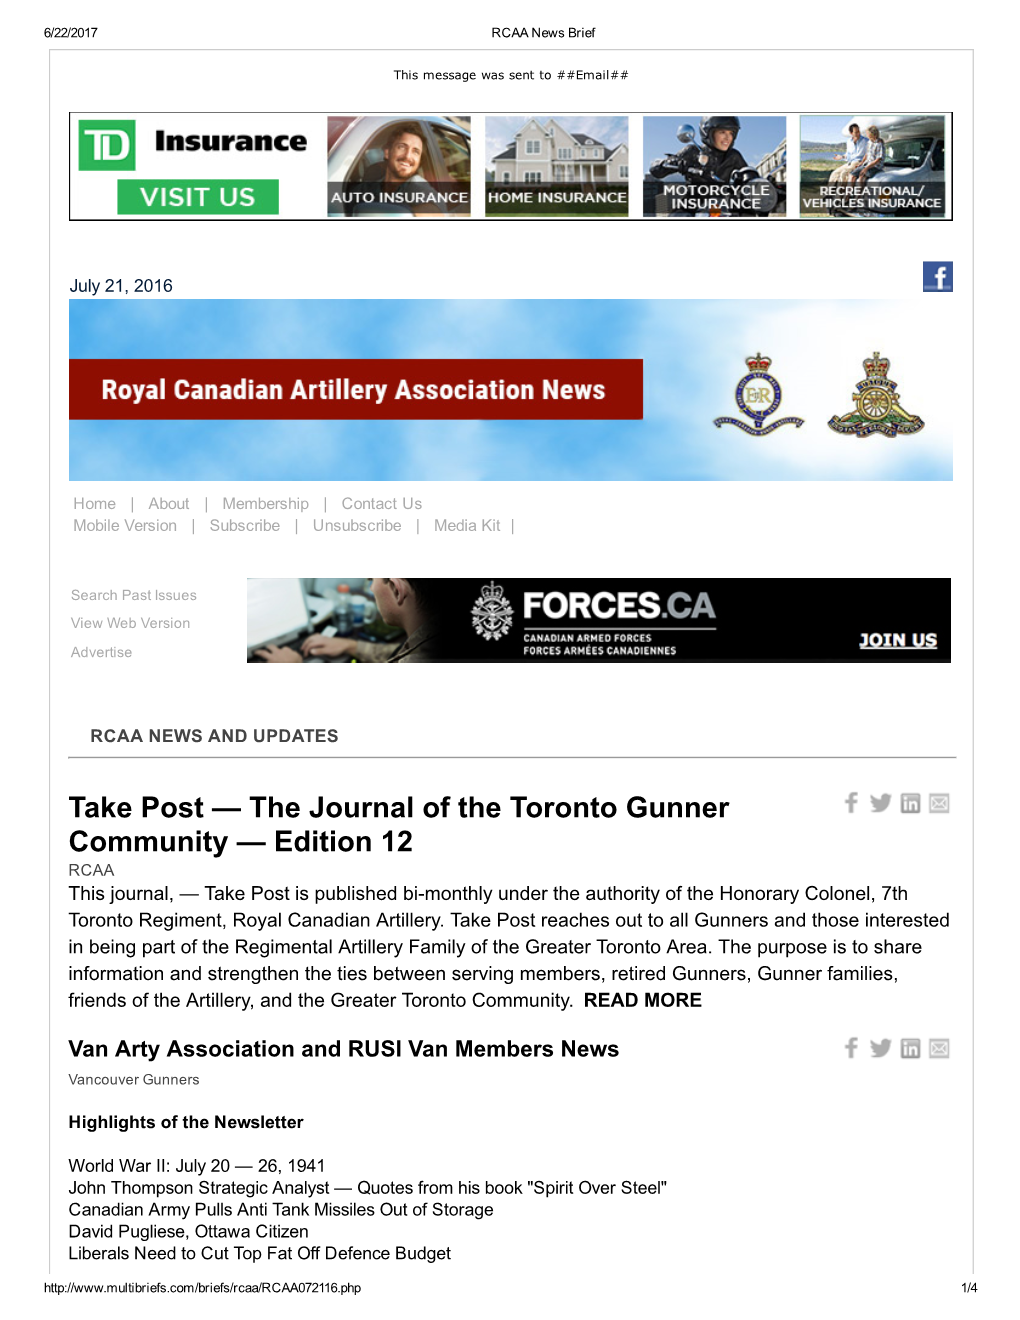 Take Post — the Journal of the Toronto Gunner Community